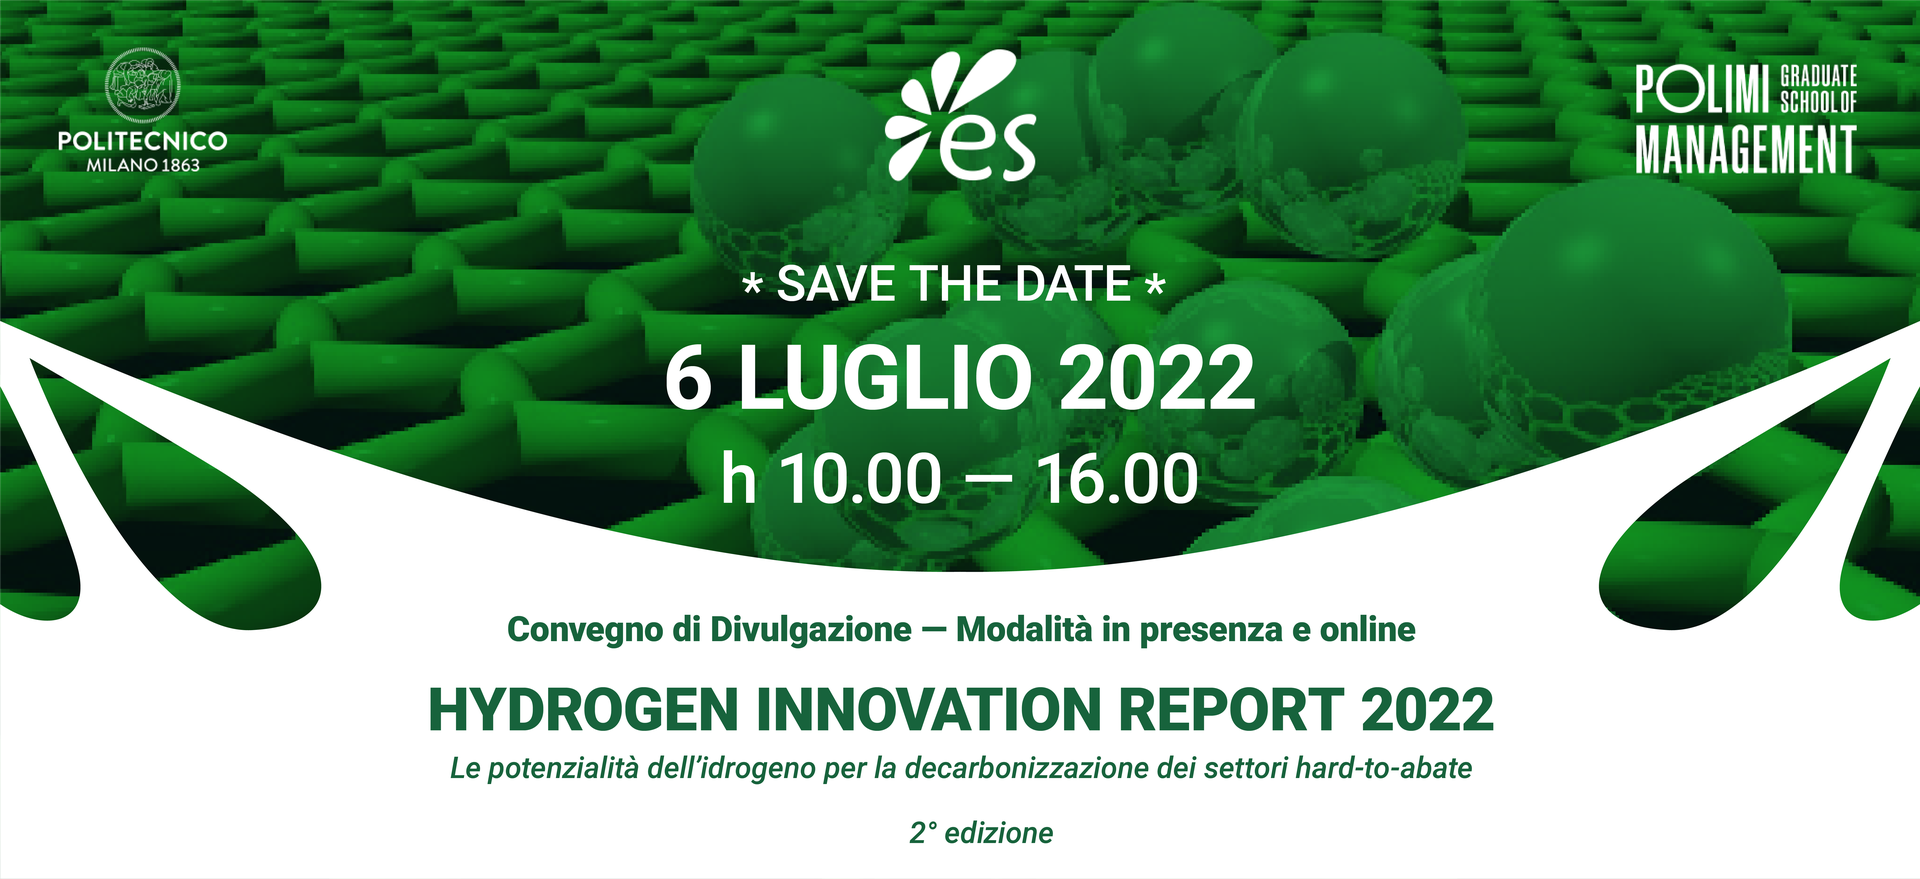 Hydrogen innovation report 2022